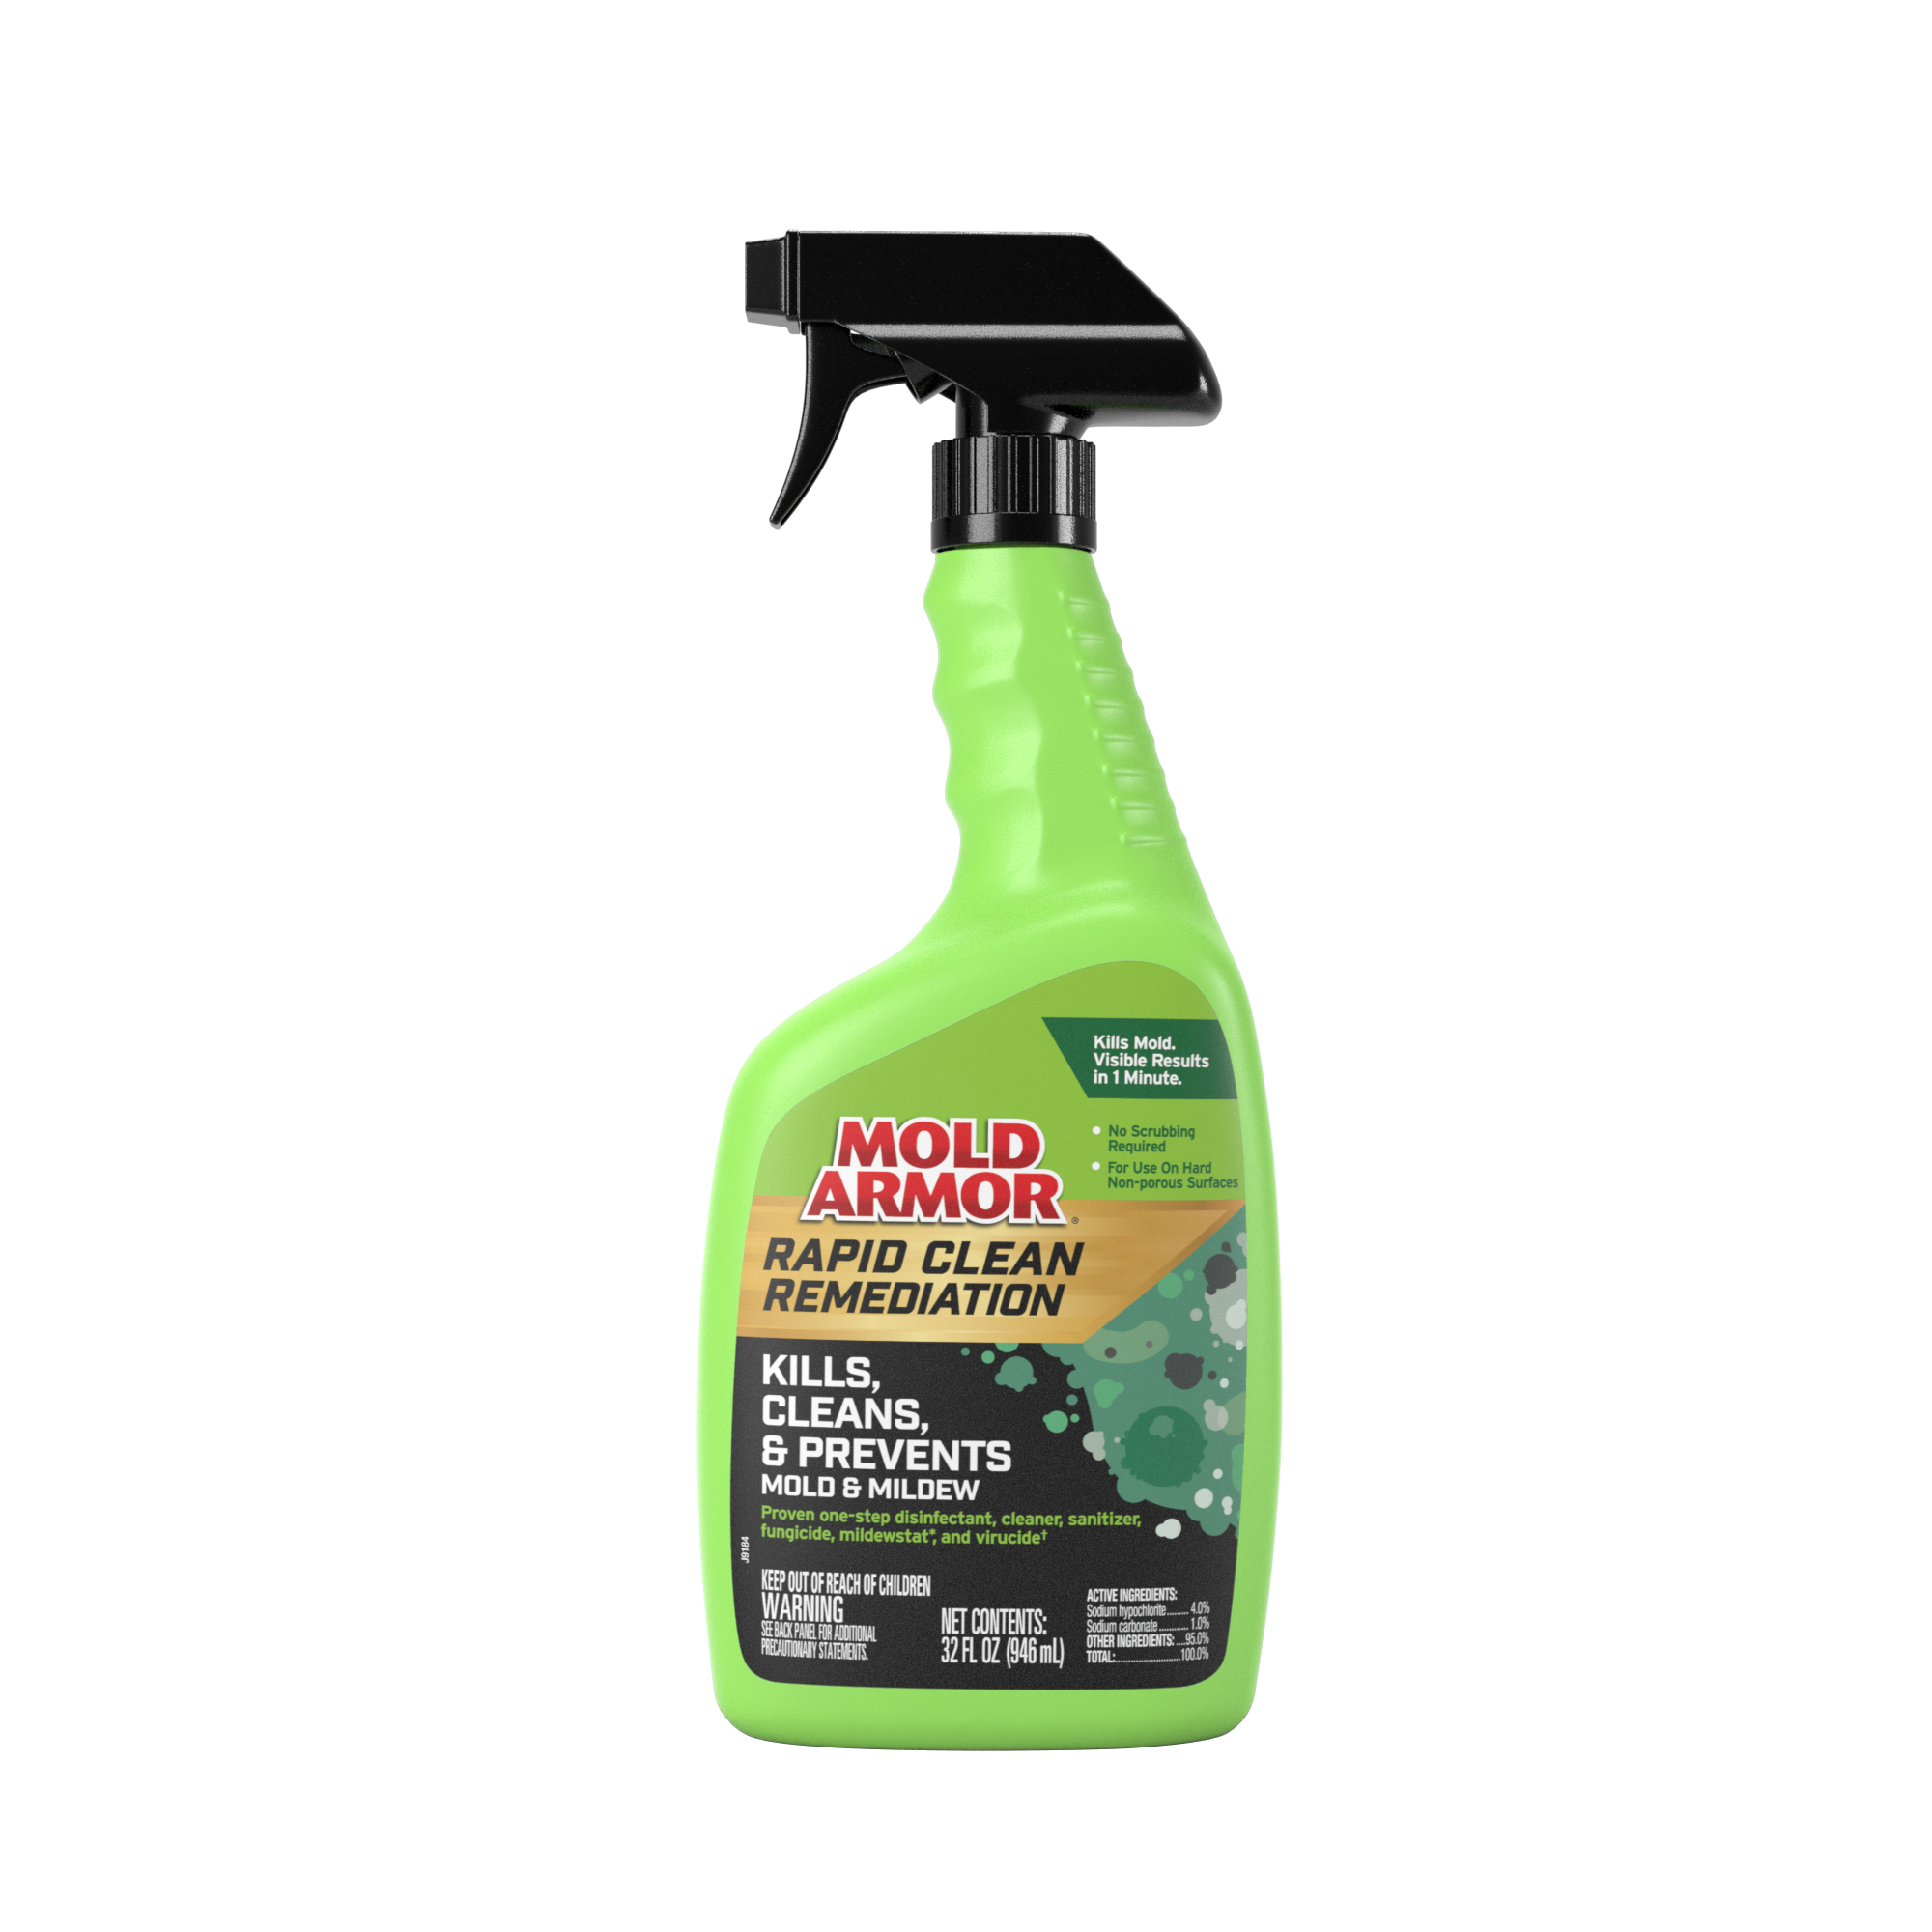 MOLD ARMOR Rapid Clean Remediation - 32oz. Spray Bottle